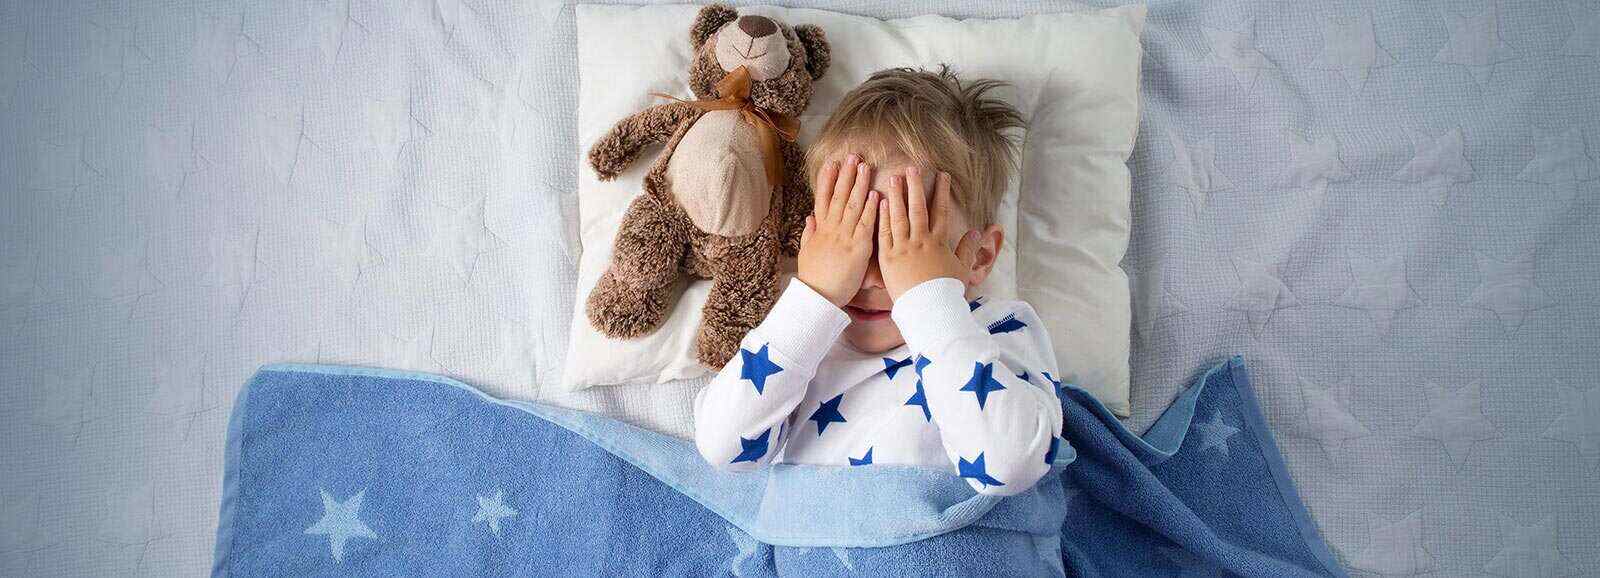 little boy in bed with a teddy bear